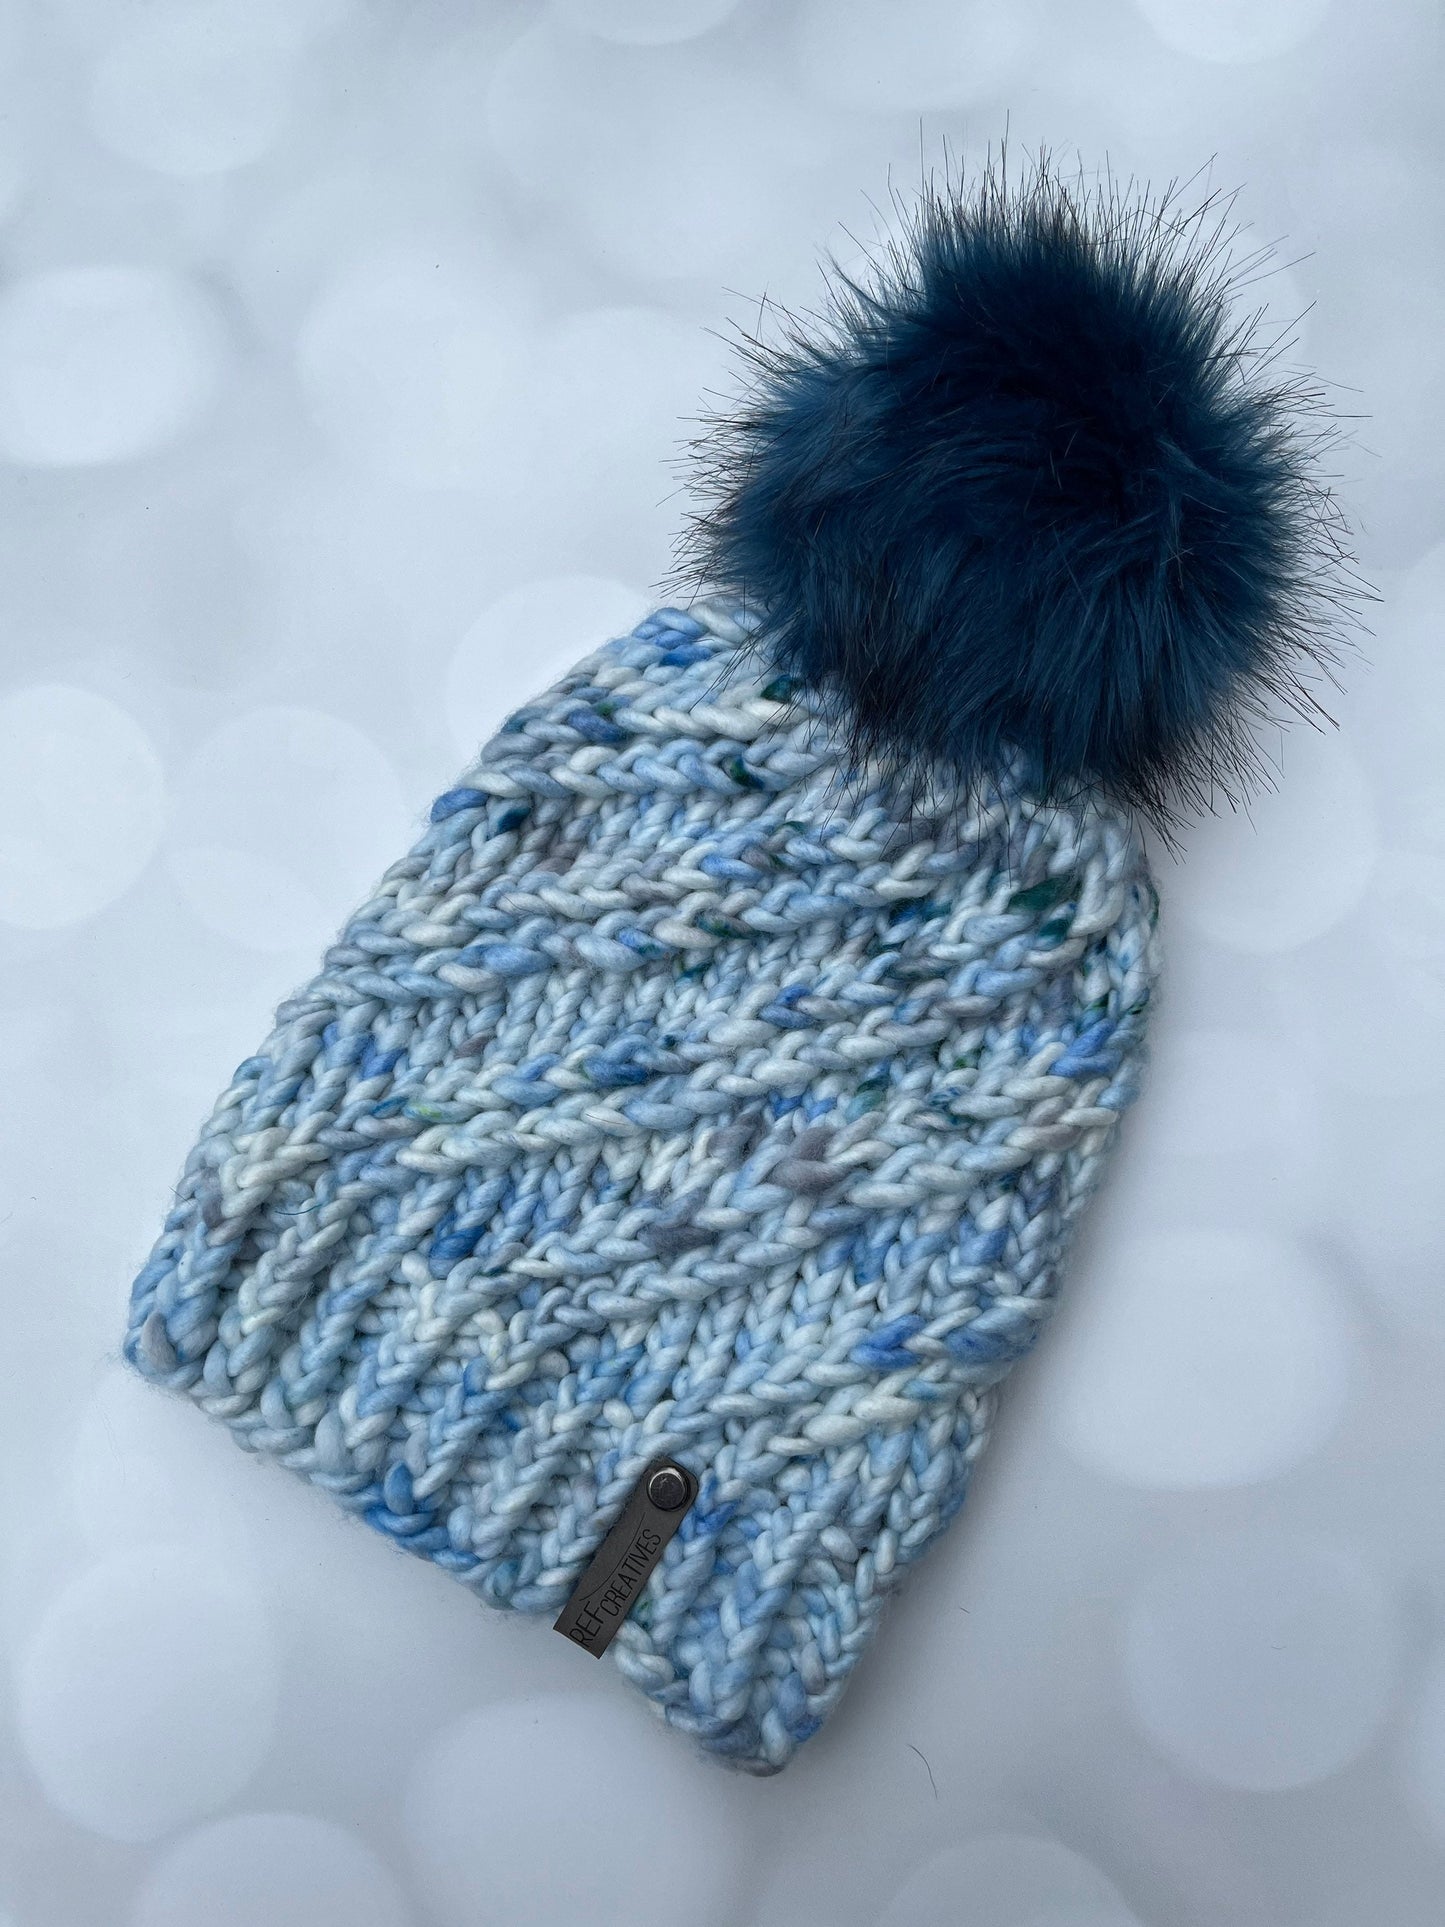 Luxury Blue Merino Wool Knit Hat - Snow Drifts Swirls Hand Knit Hat with Hand Dyed Yarn